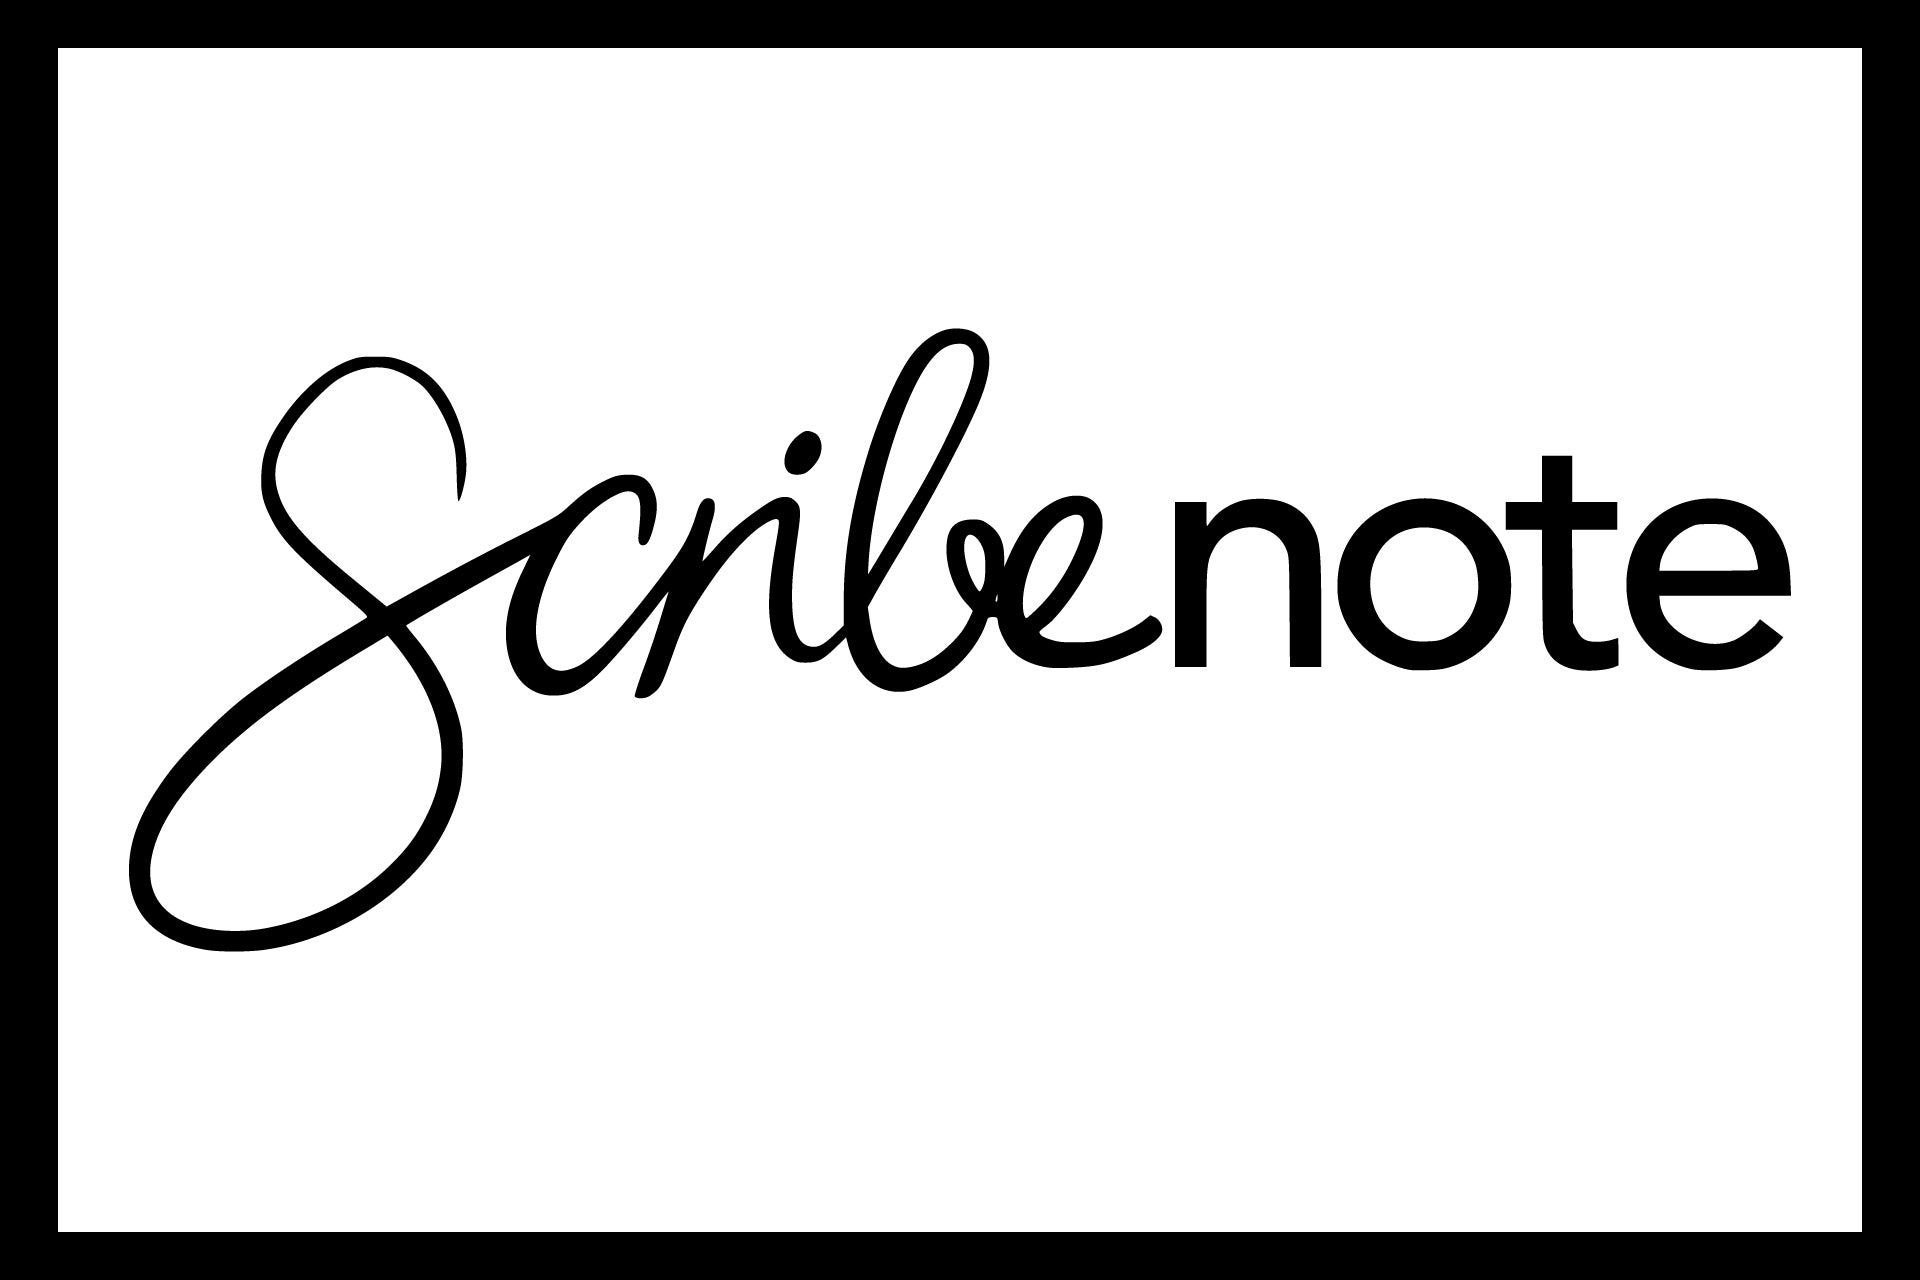 Scribenote logo